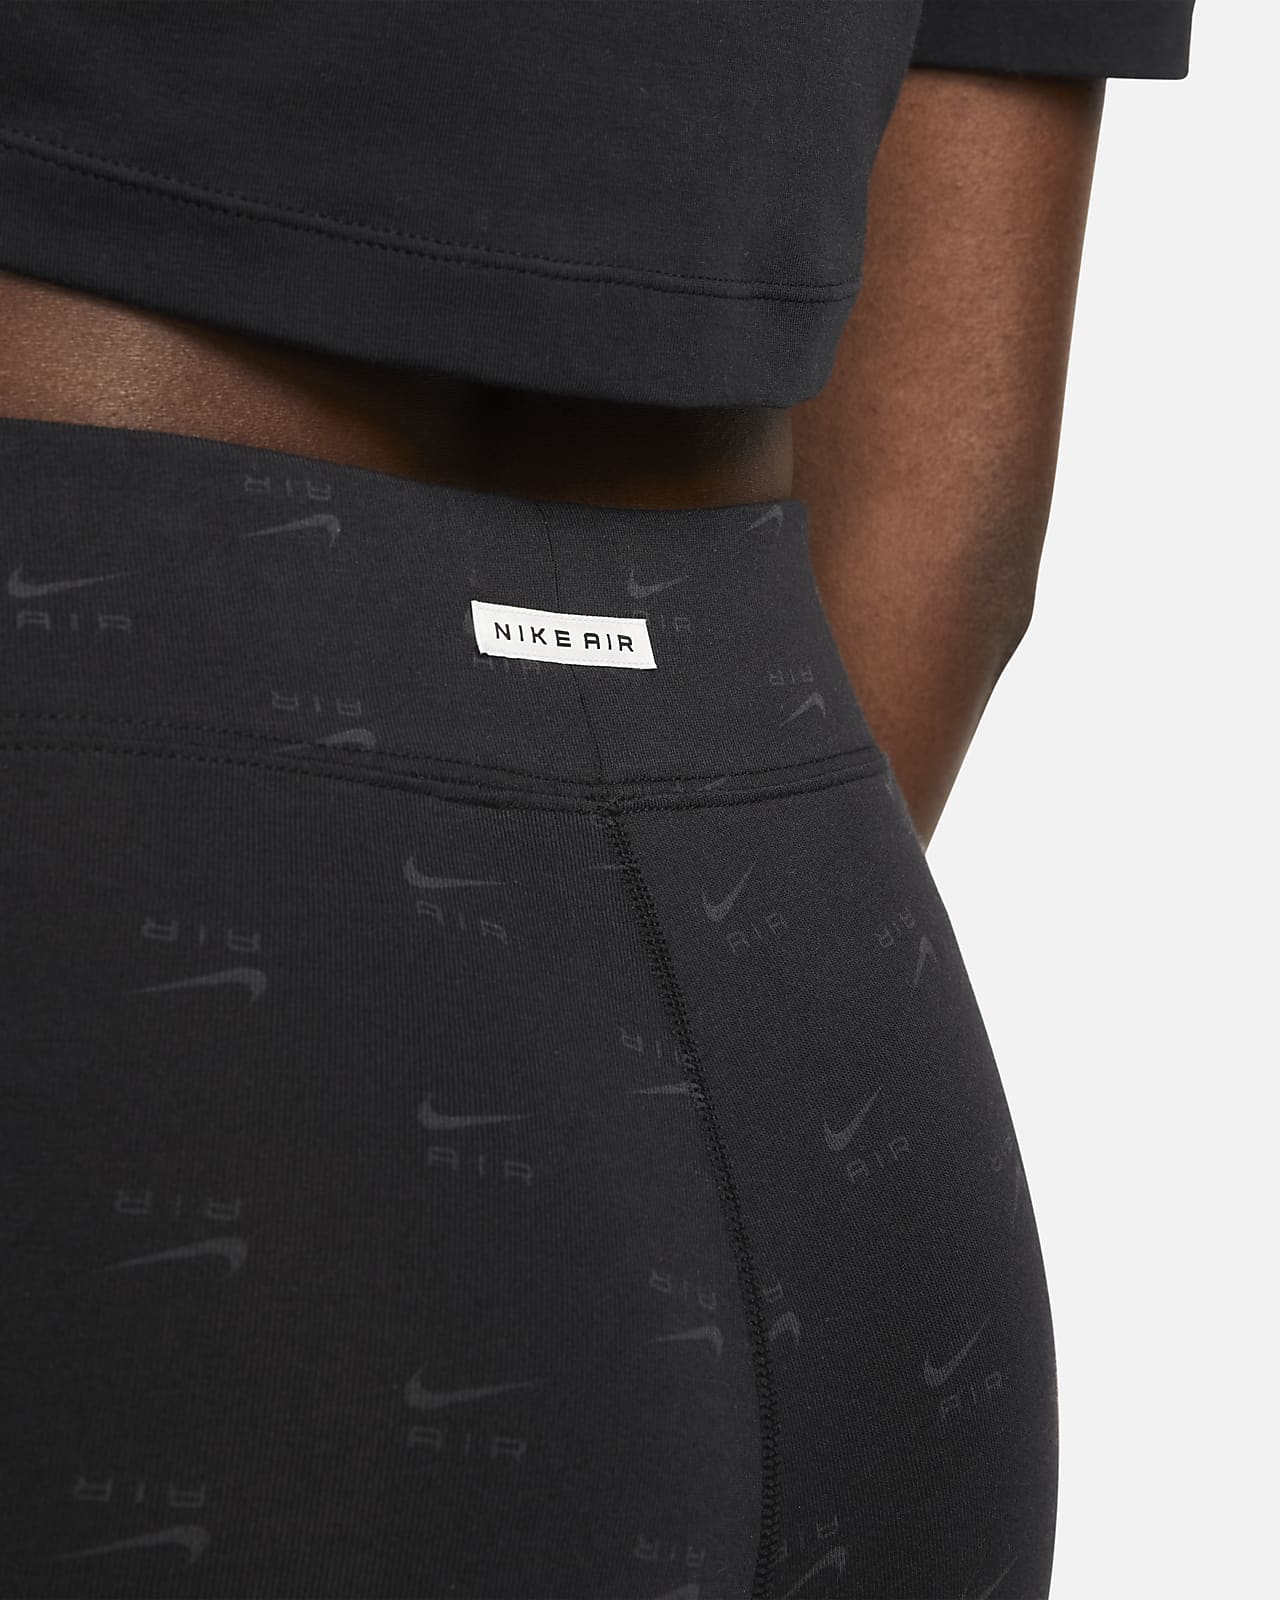 Sold on Mercari  Nike leggings black, Leggings are not pants, Pants for  women